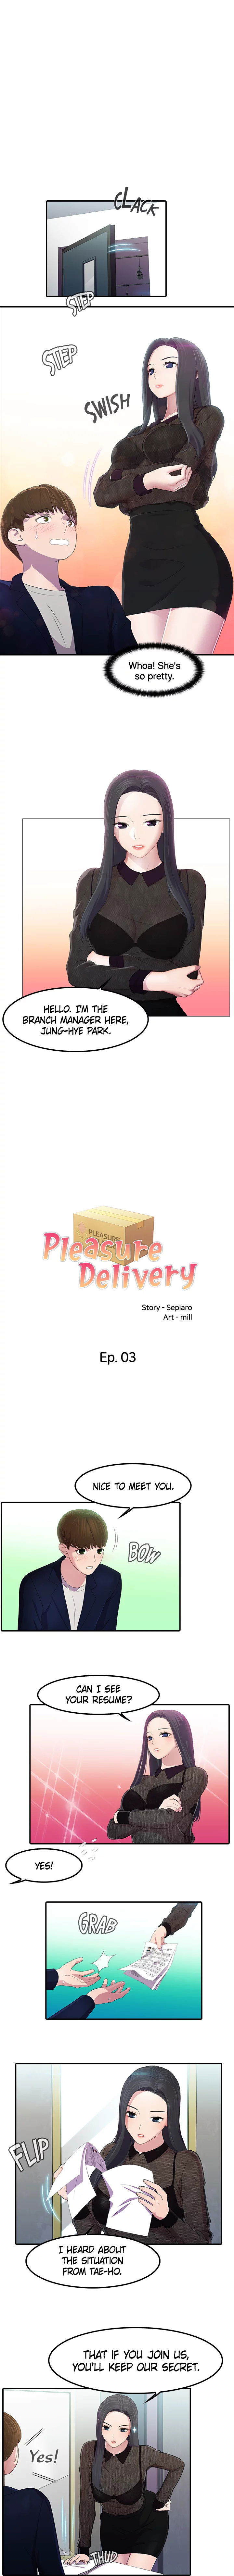 pleasure-delivery-chap-3-0